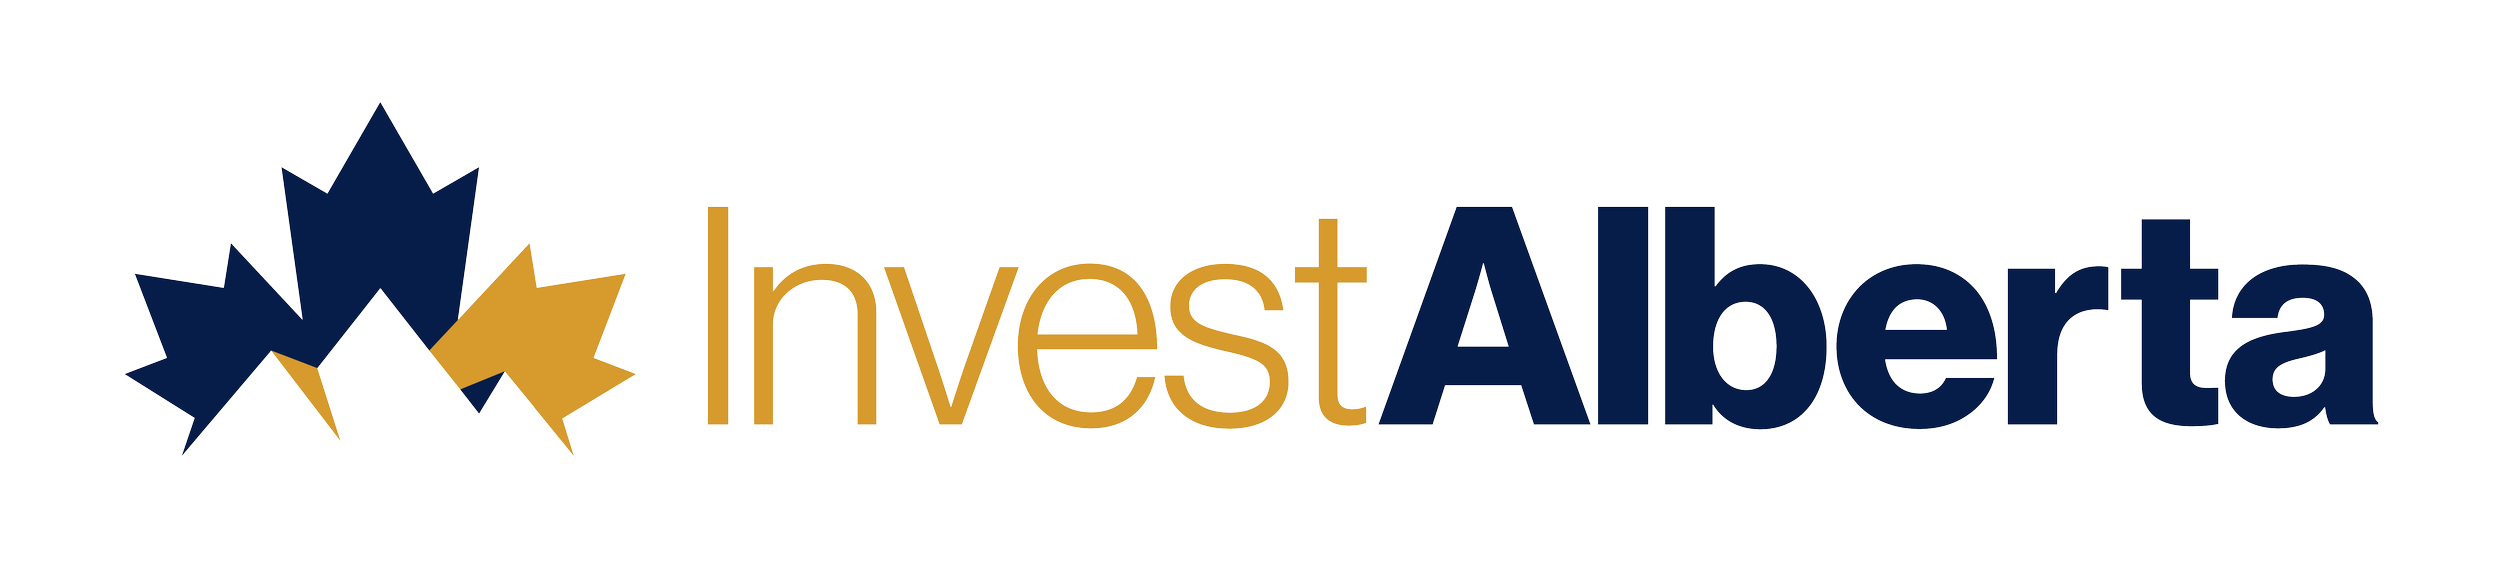 Invest Alberta Logo (Horizontal - Colour) (1).png